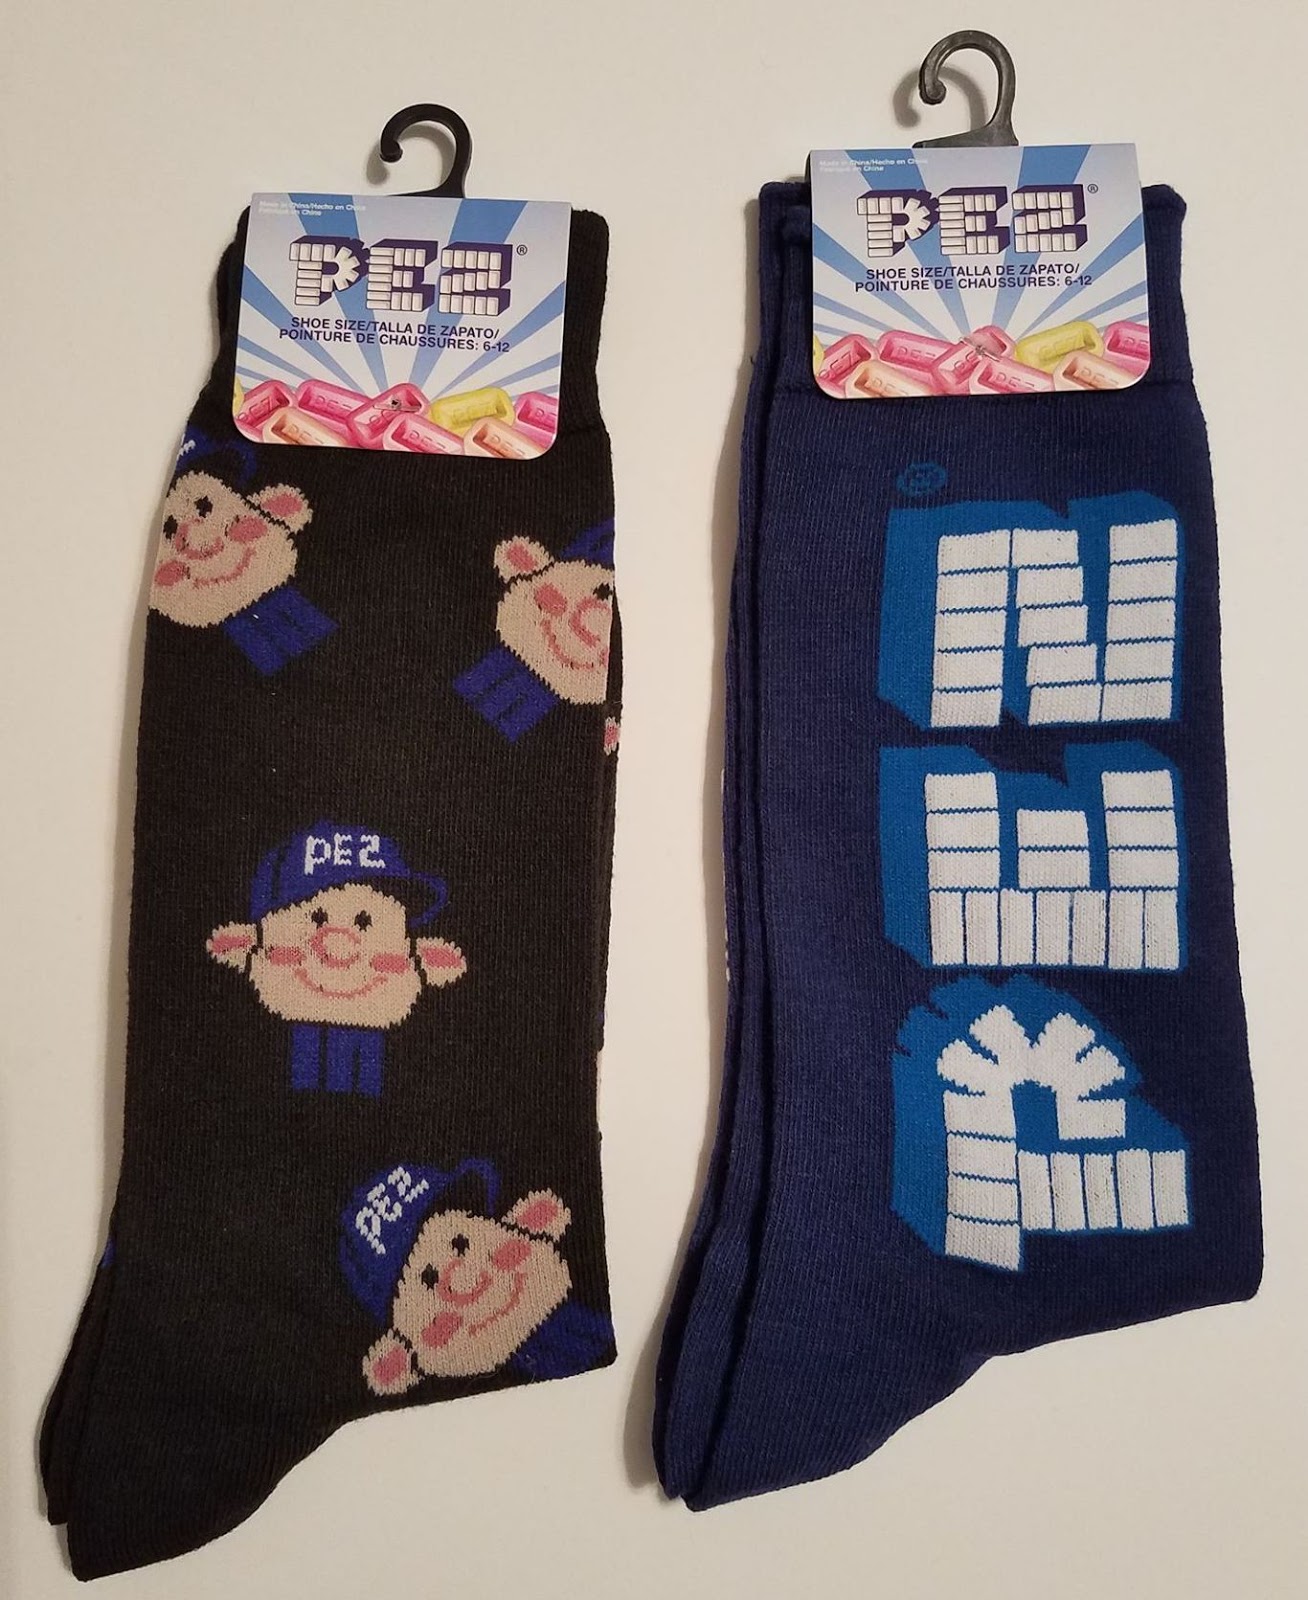 Pez Palz Friends of PEZ: Style up your life with new PEZ socks...